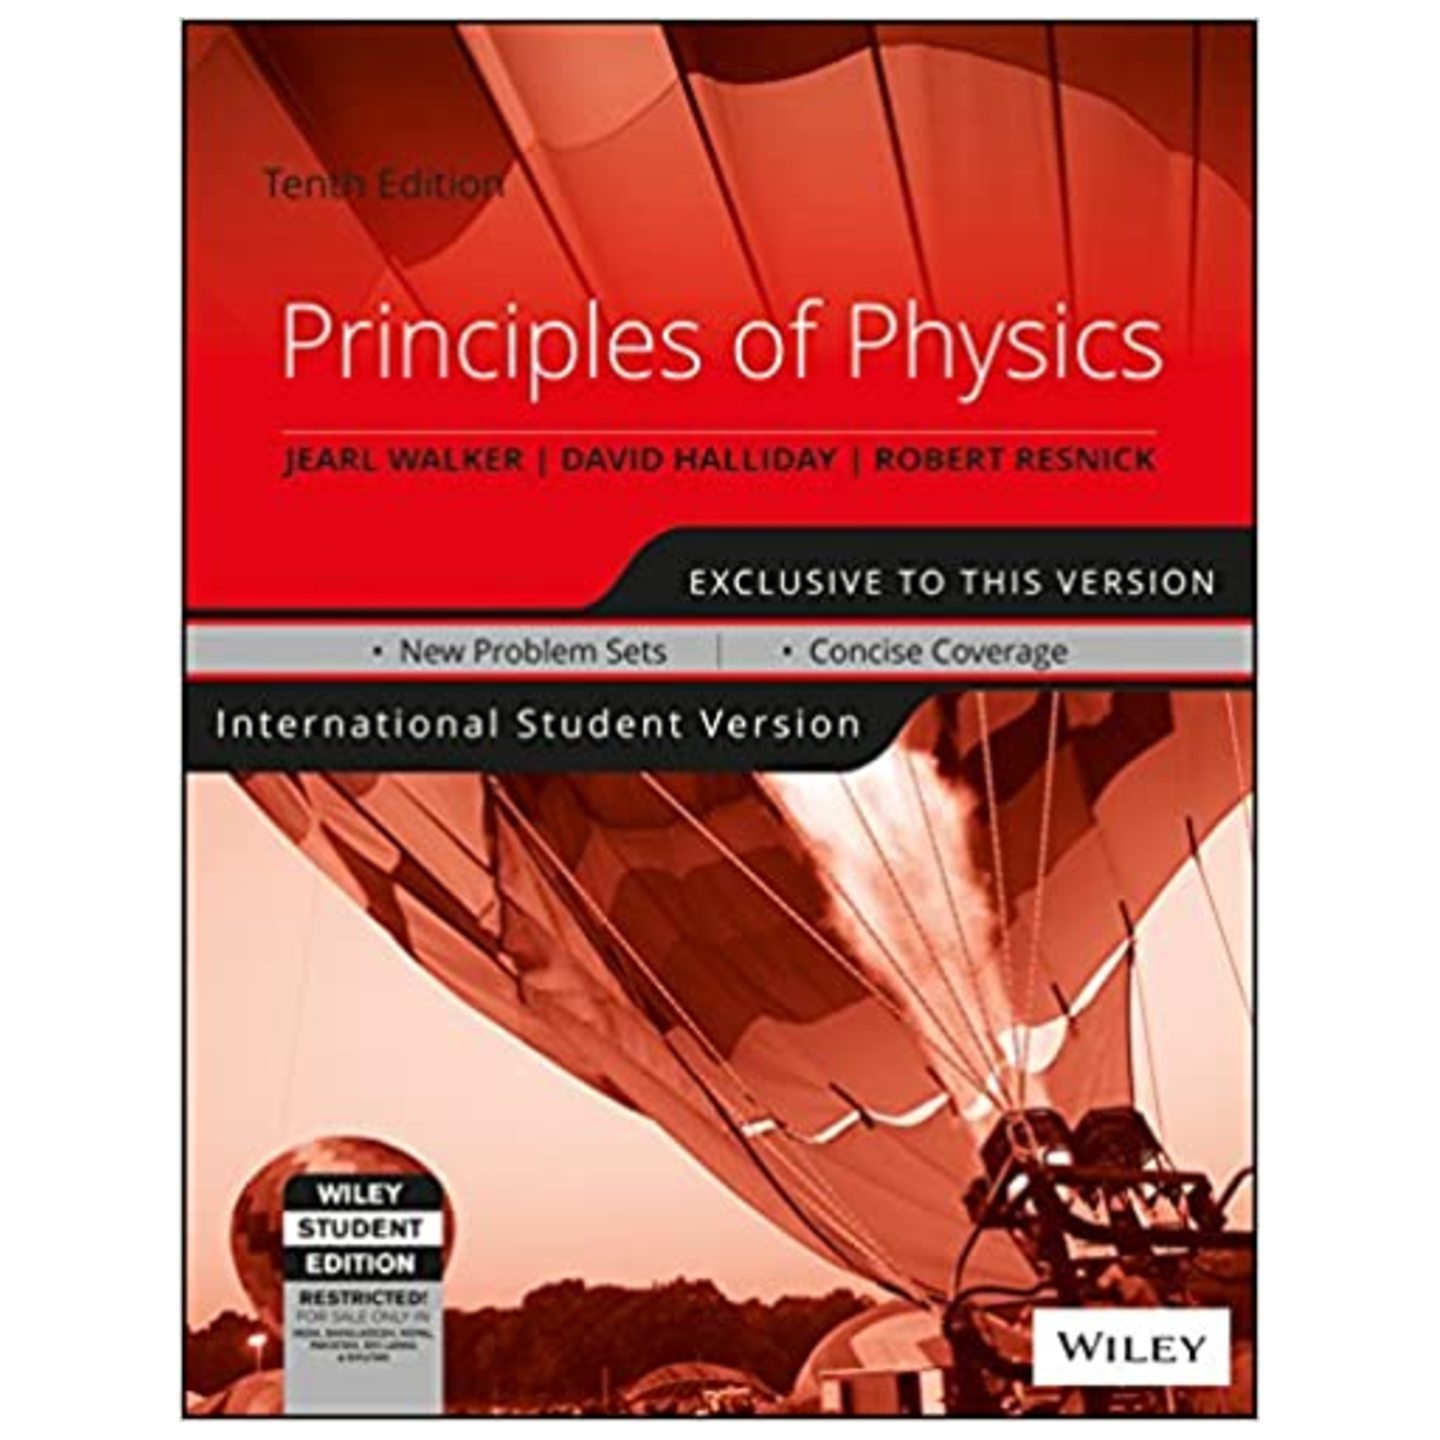 Principles of Physics by Robert Resnick Jearl Walker, David Halliday